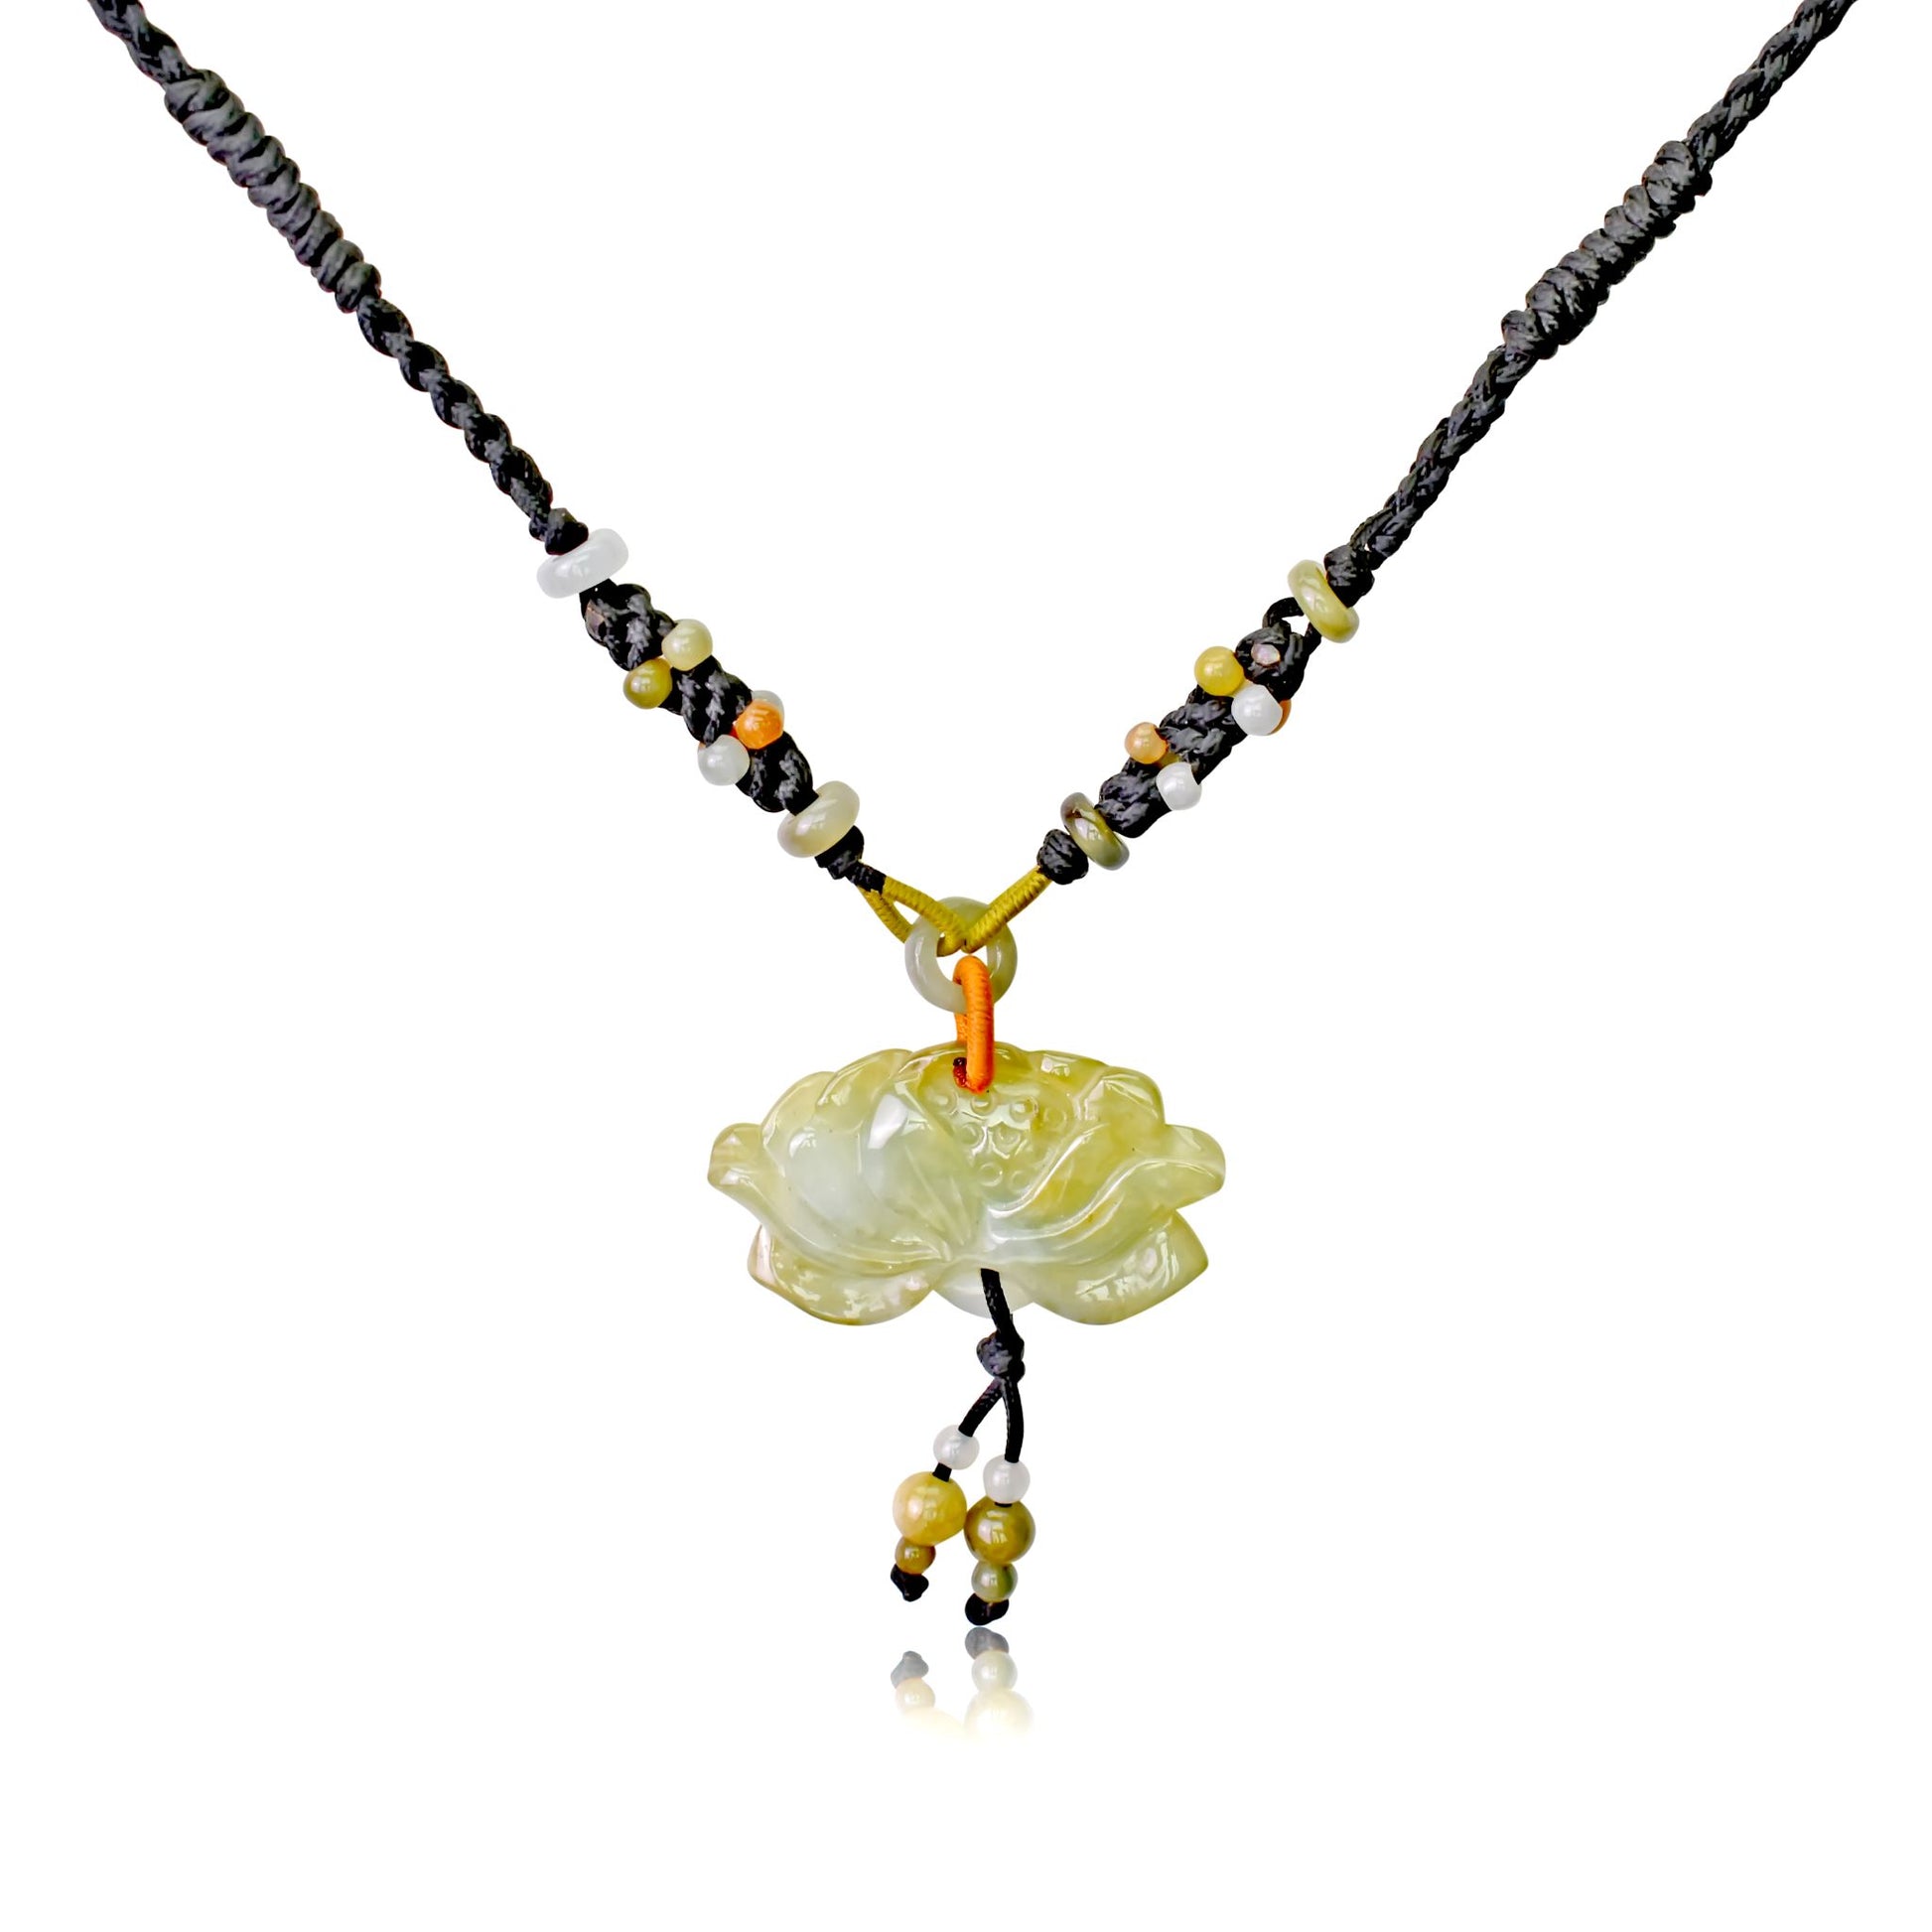 Beautiful Lotus Flower Handmade Jade Necklace Pendant with Black Cord